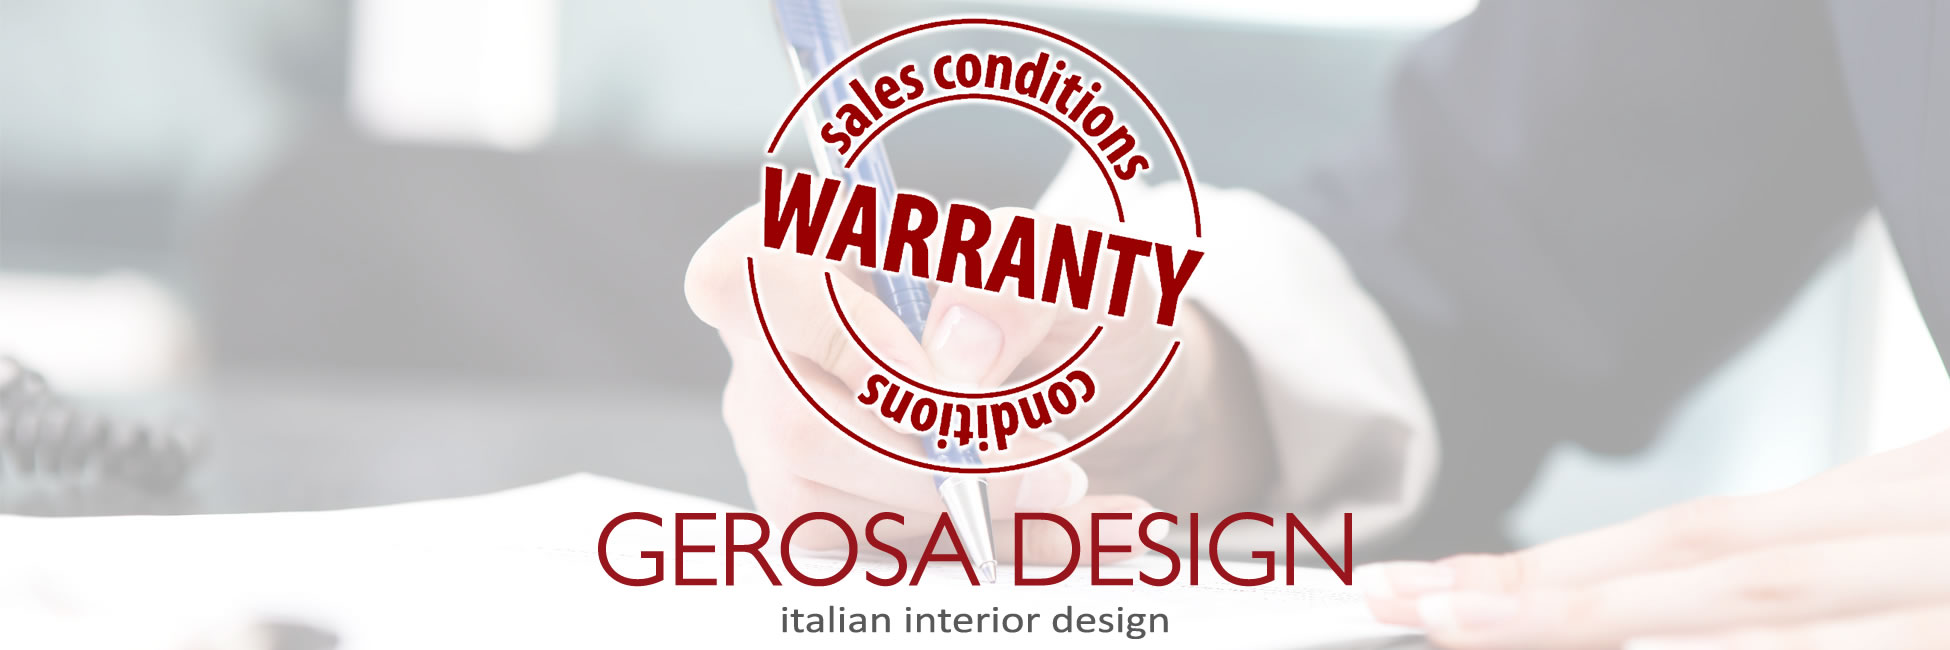 General conditions of Sale - Gerosa Design